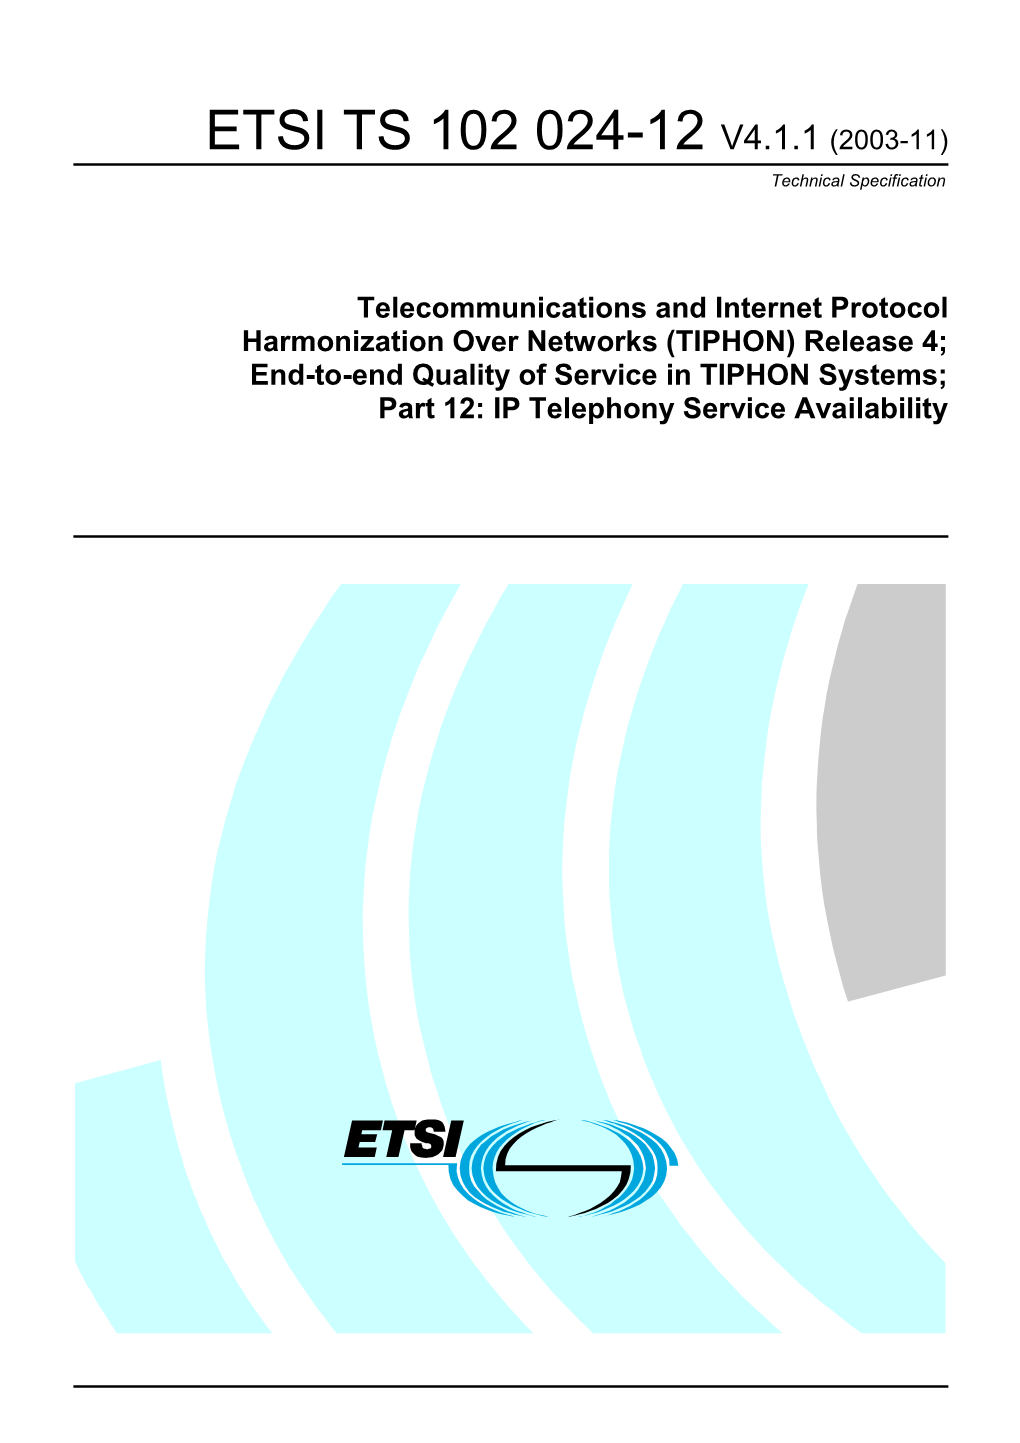 ETSI TS 102 024-12 V4.1.1 (2003-11) Technical Specification